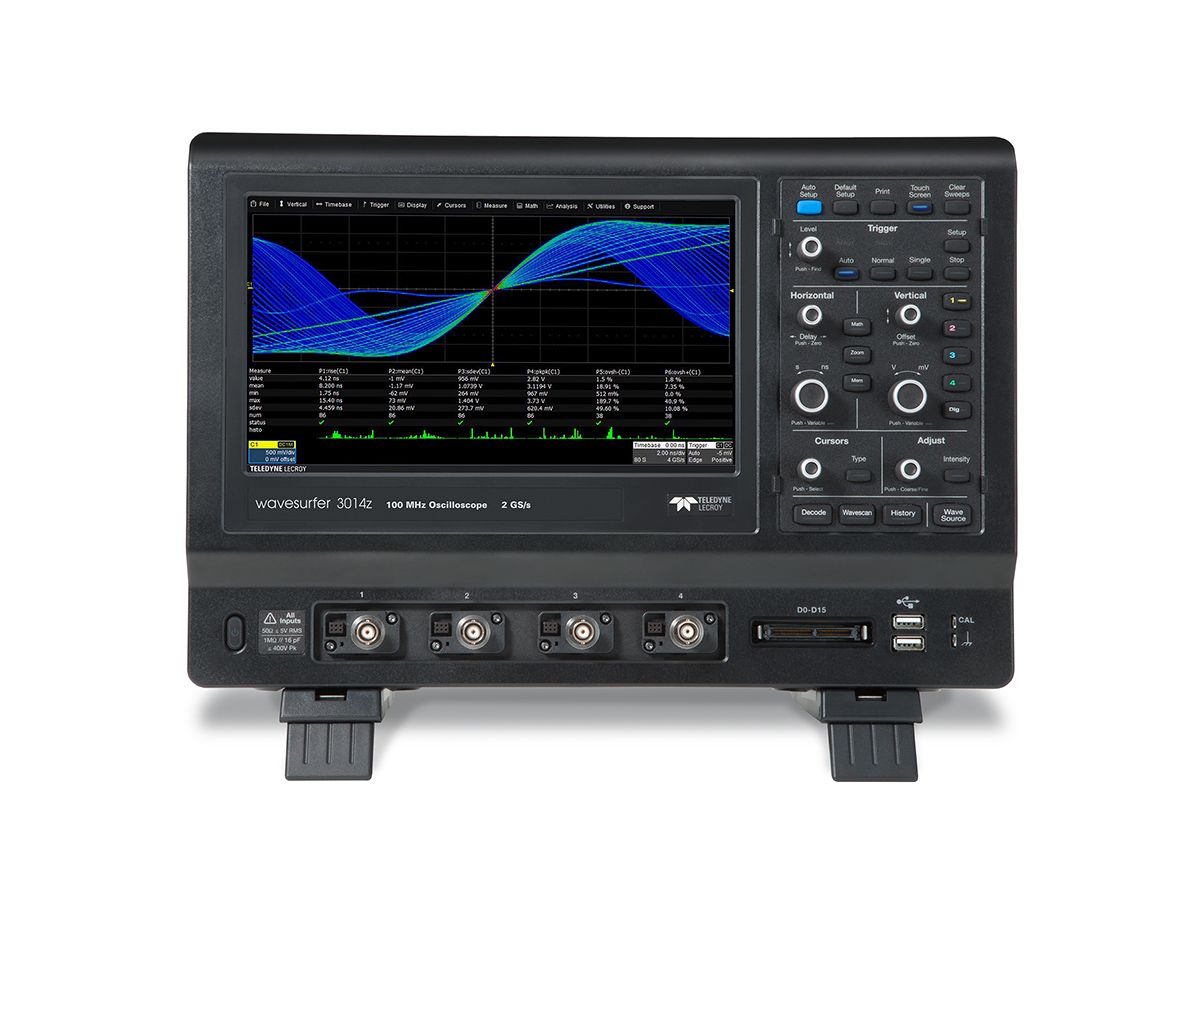 Oscilloscopio Da banco Teledyne LeCroy WaveSurfer 3034z COMPLETAMENTE CARICATO, 4 ch. analogici, 350MHz